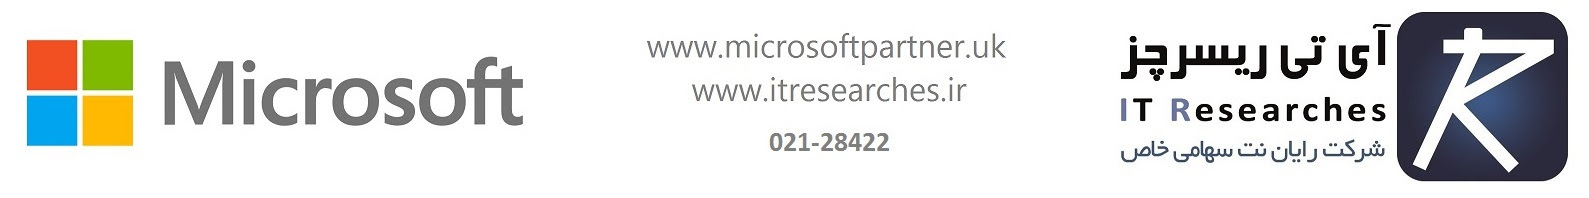 Be www.microsoftpartner.uk Jpg Ww tl
* . . v
[1] Microsof t DBR ESSERE IT Researches

021-28422 o> lg ly Sp